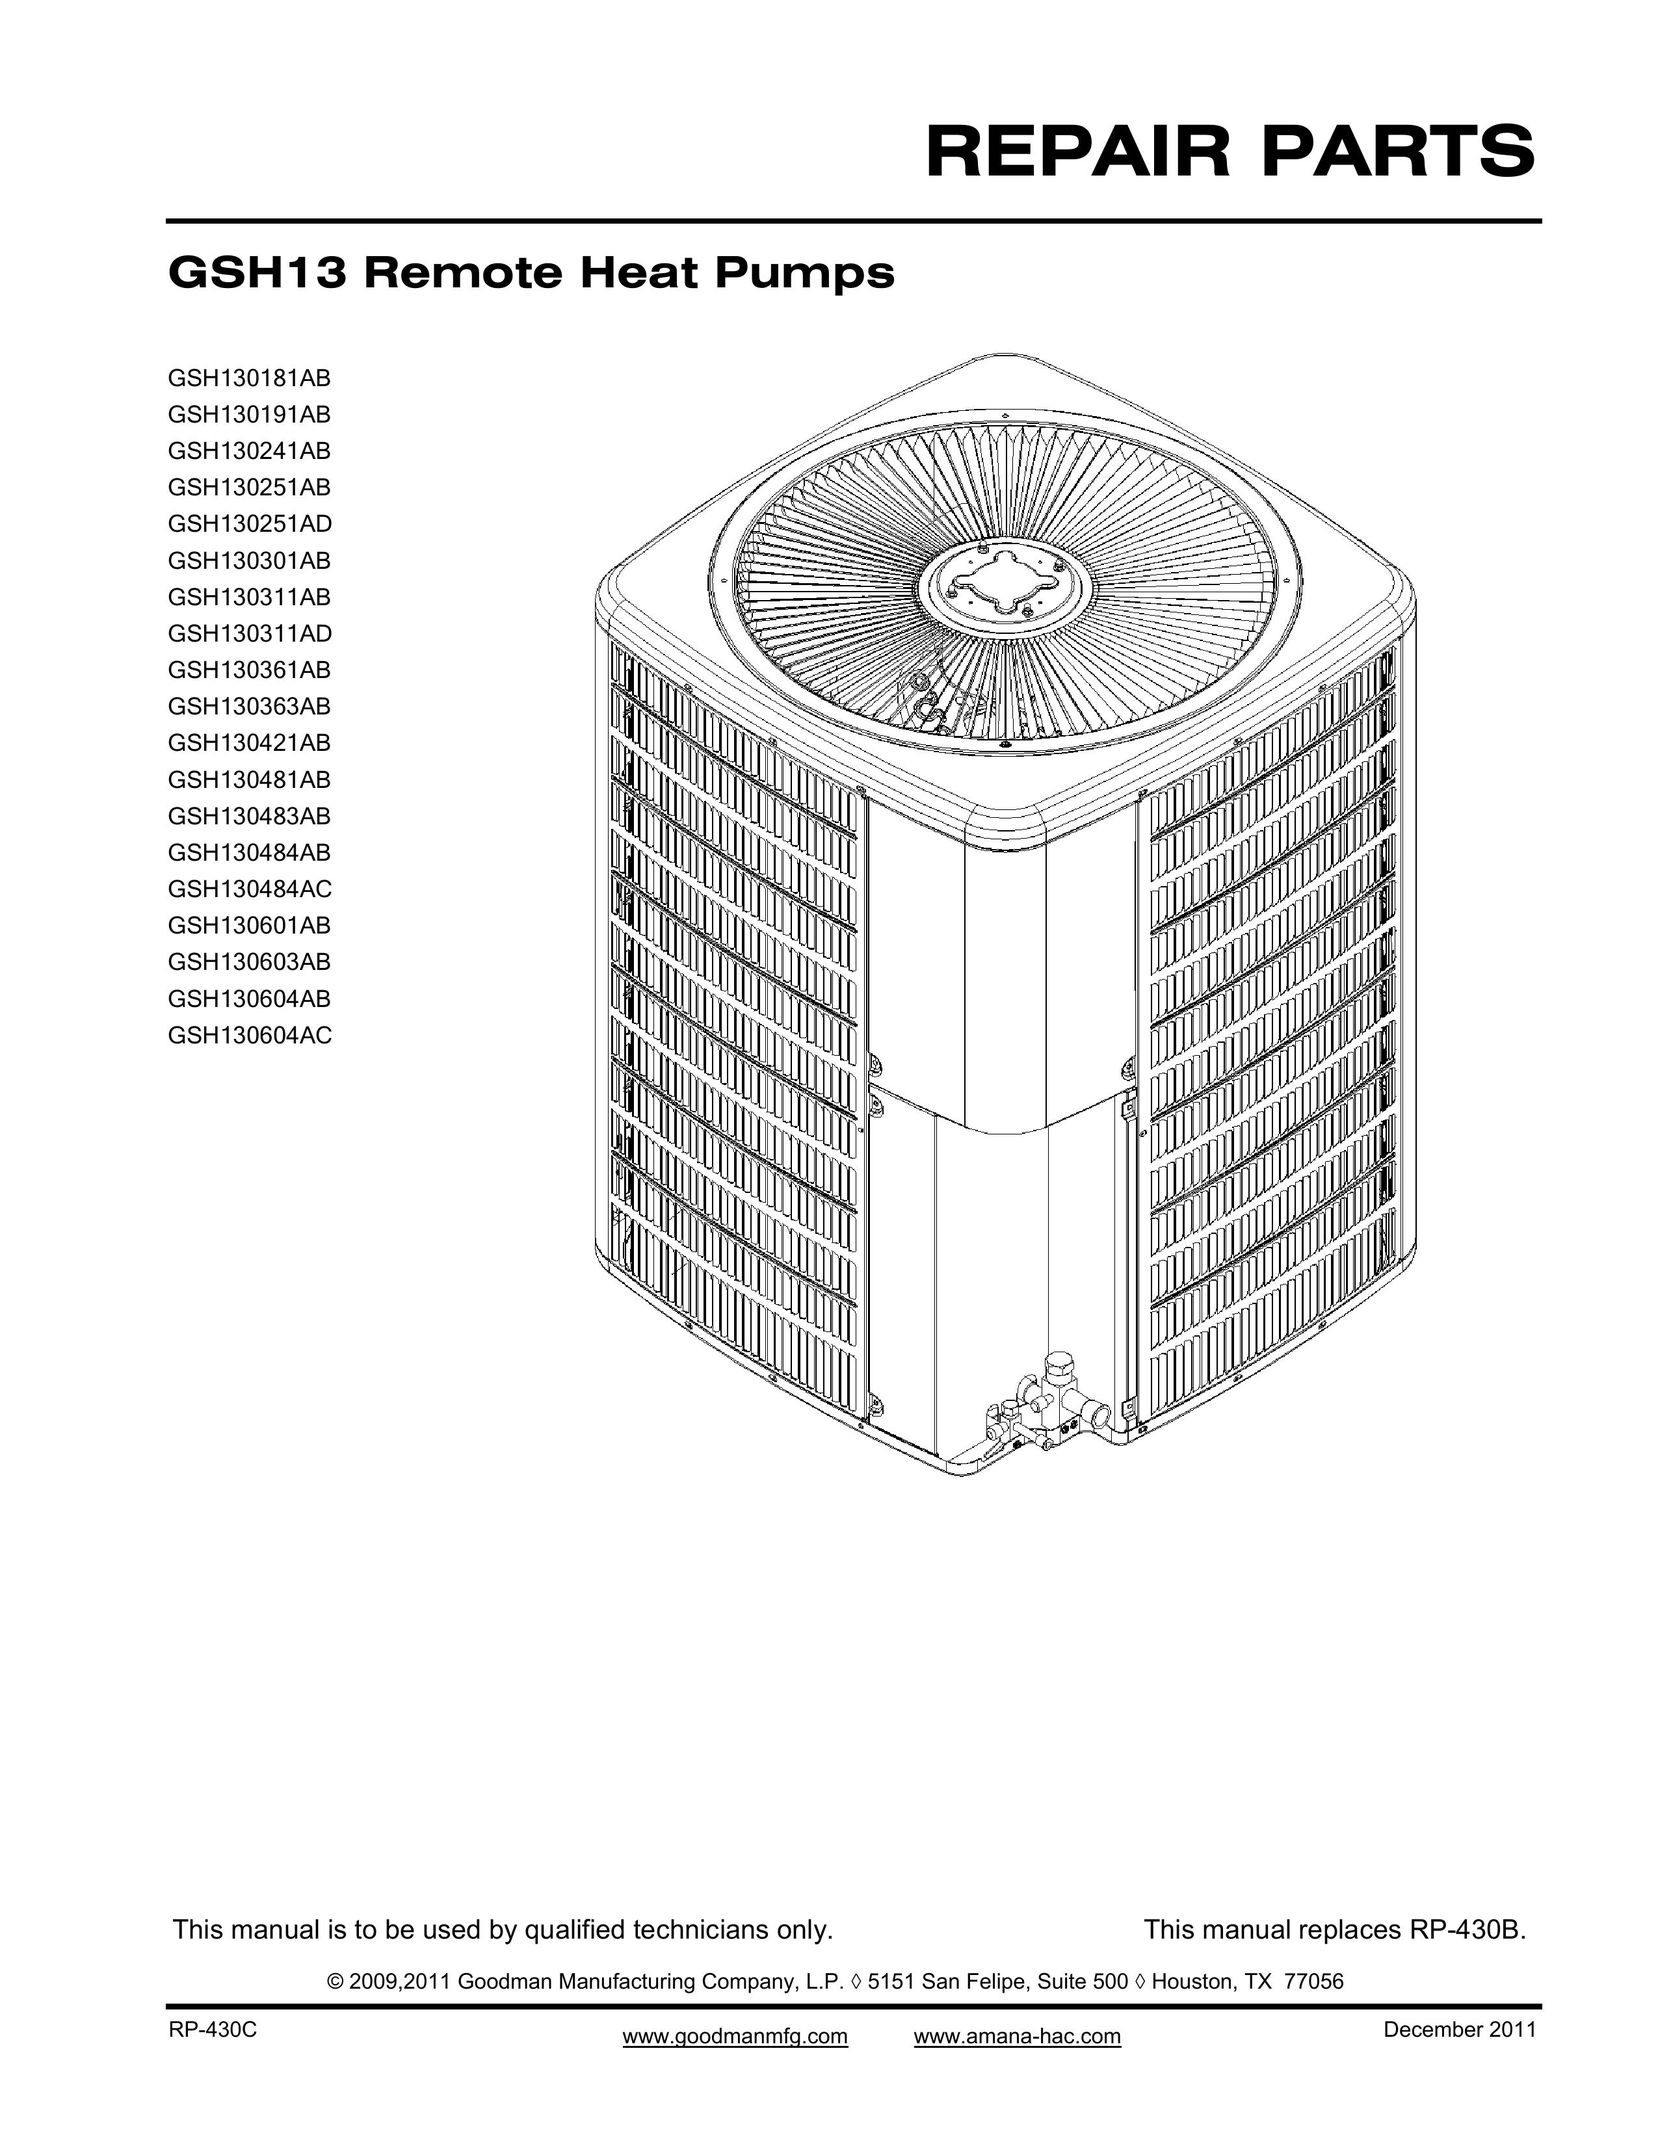 Goodman Mfg RP-430C Heat Pump User Manual